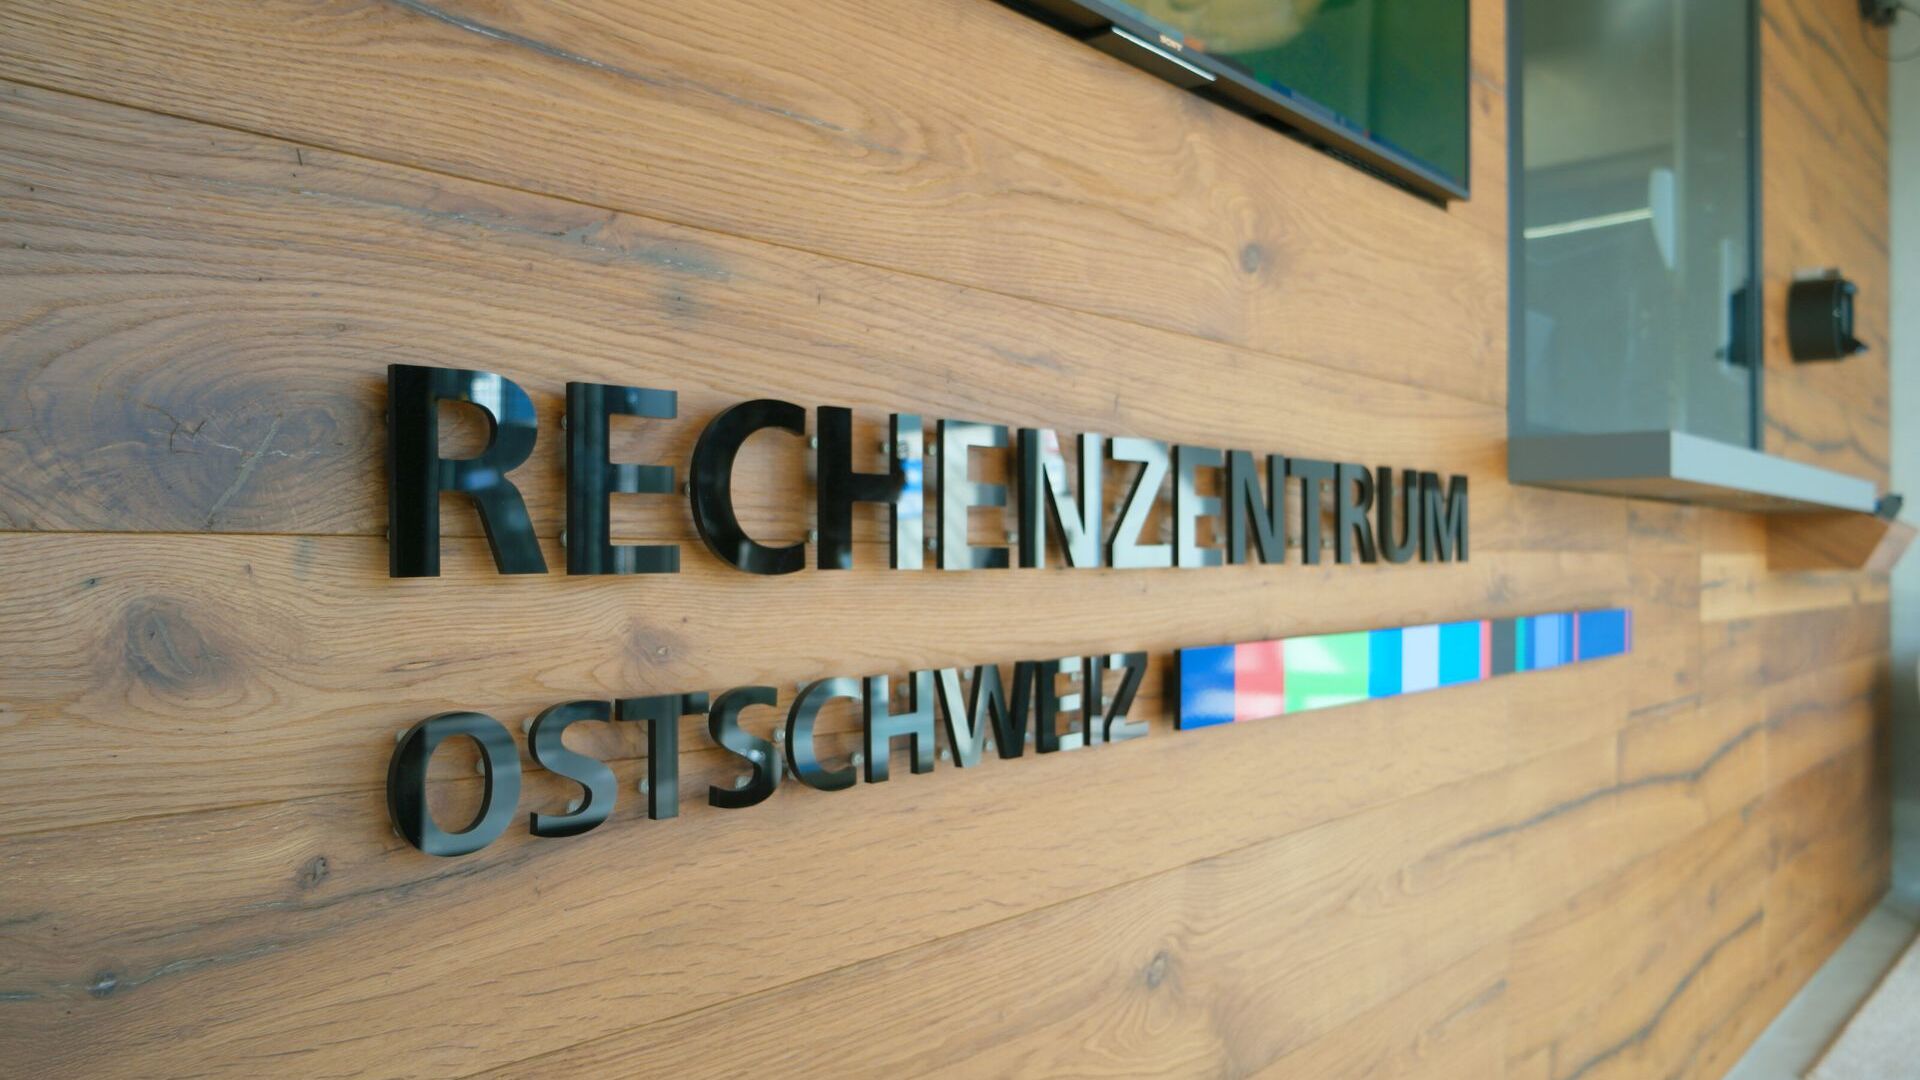 Notranji vhod in vratarnica Rechenzentrum Ostschweiz v Gaisu v Appenzell Ausserrhodenu